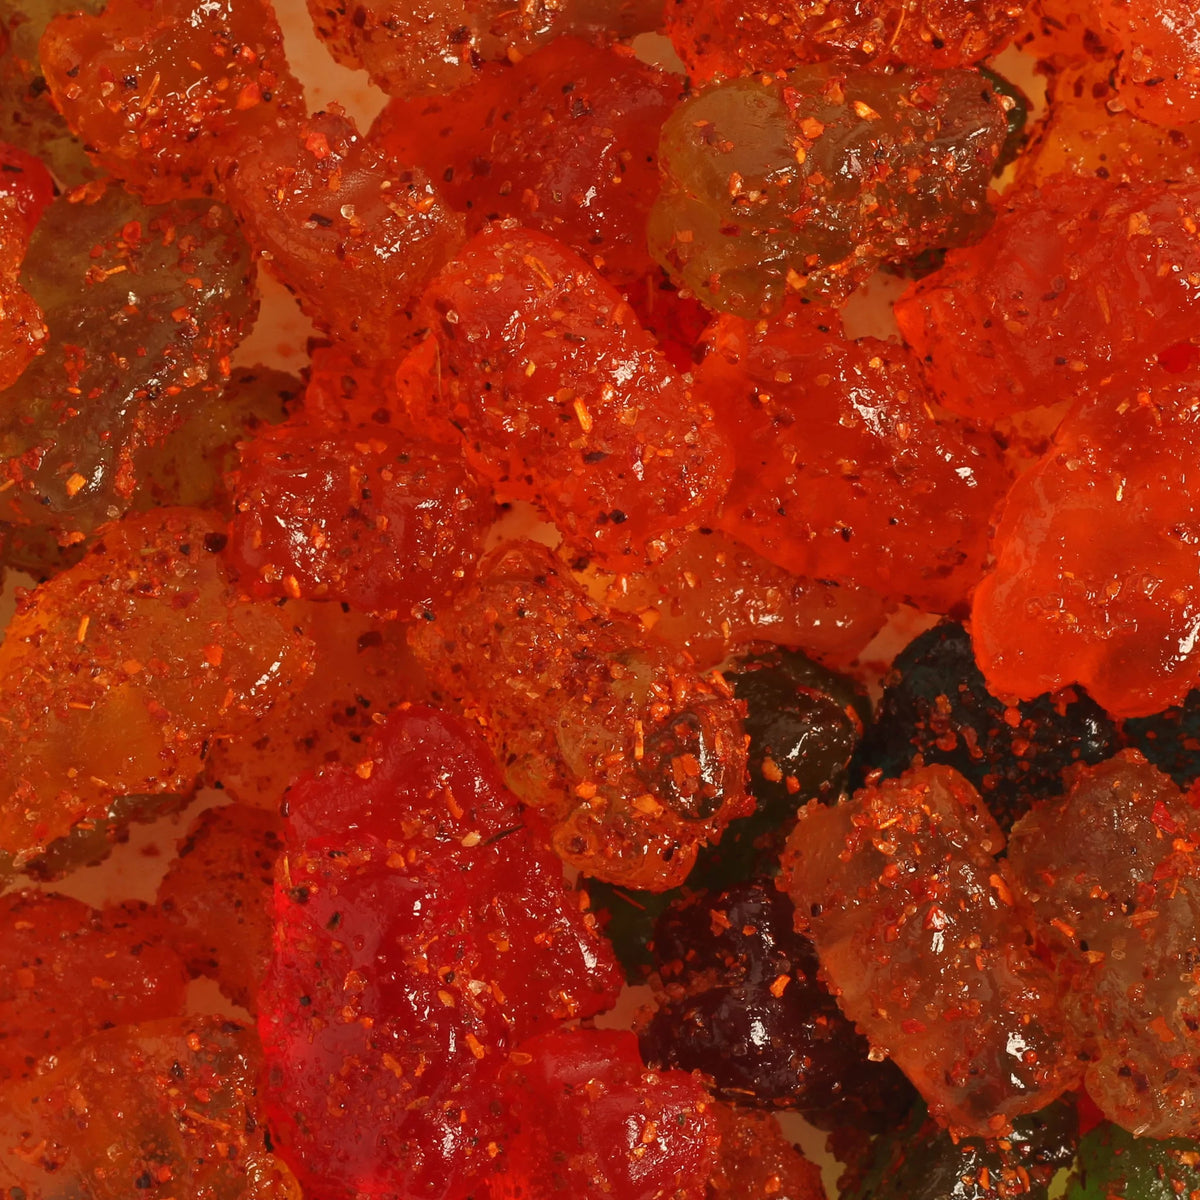 Chilli Bomba Spicy Gummy Bears Chamoy Candy - 8oz